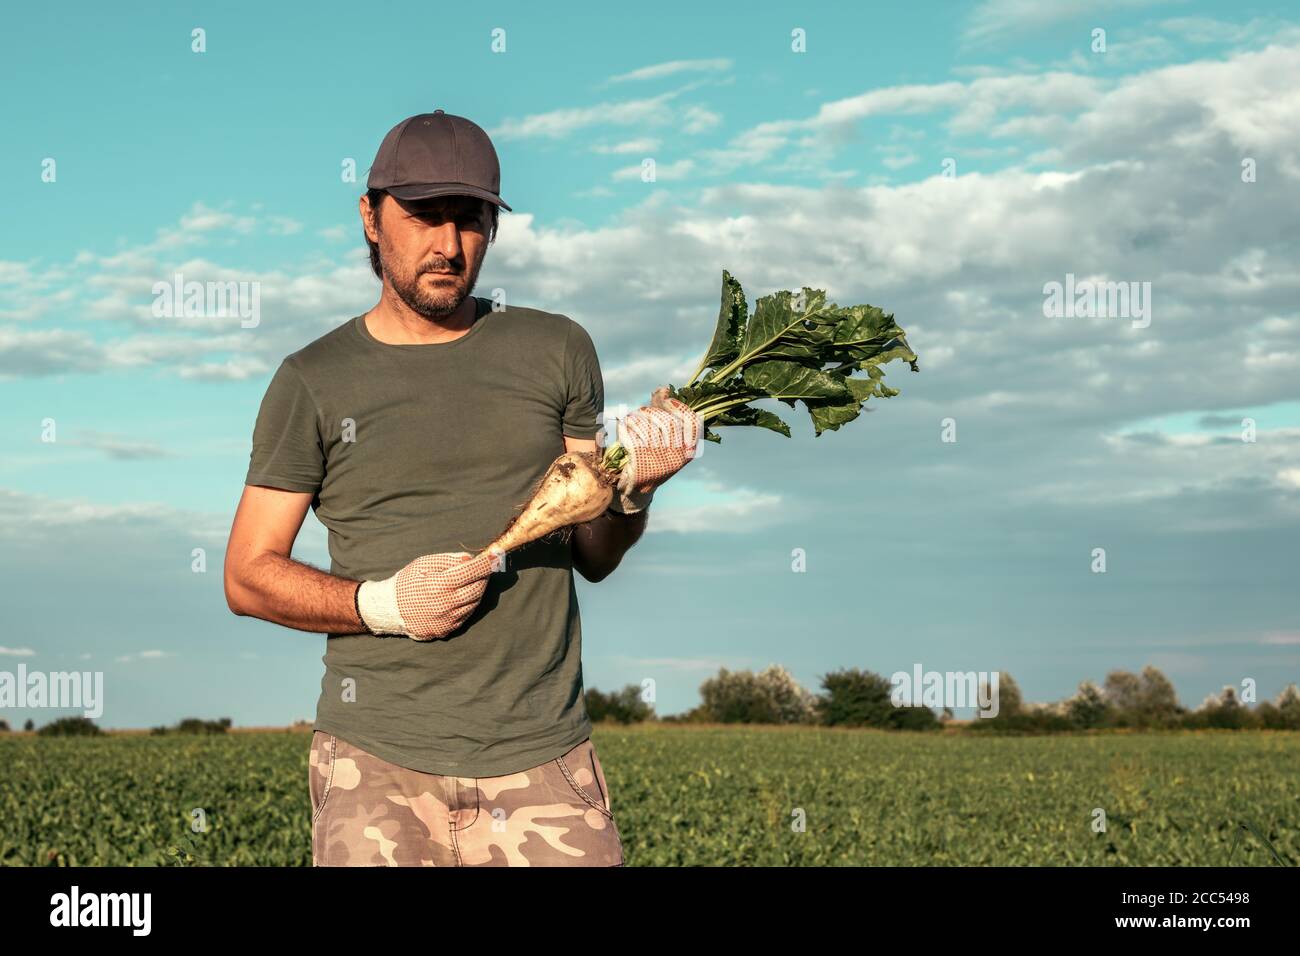 Male farmer posing in sugar beet field, Beta vulgaris cultivation Stock Photo